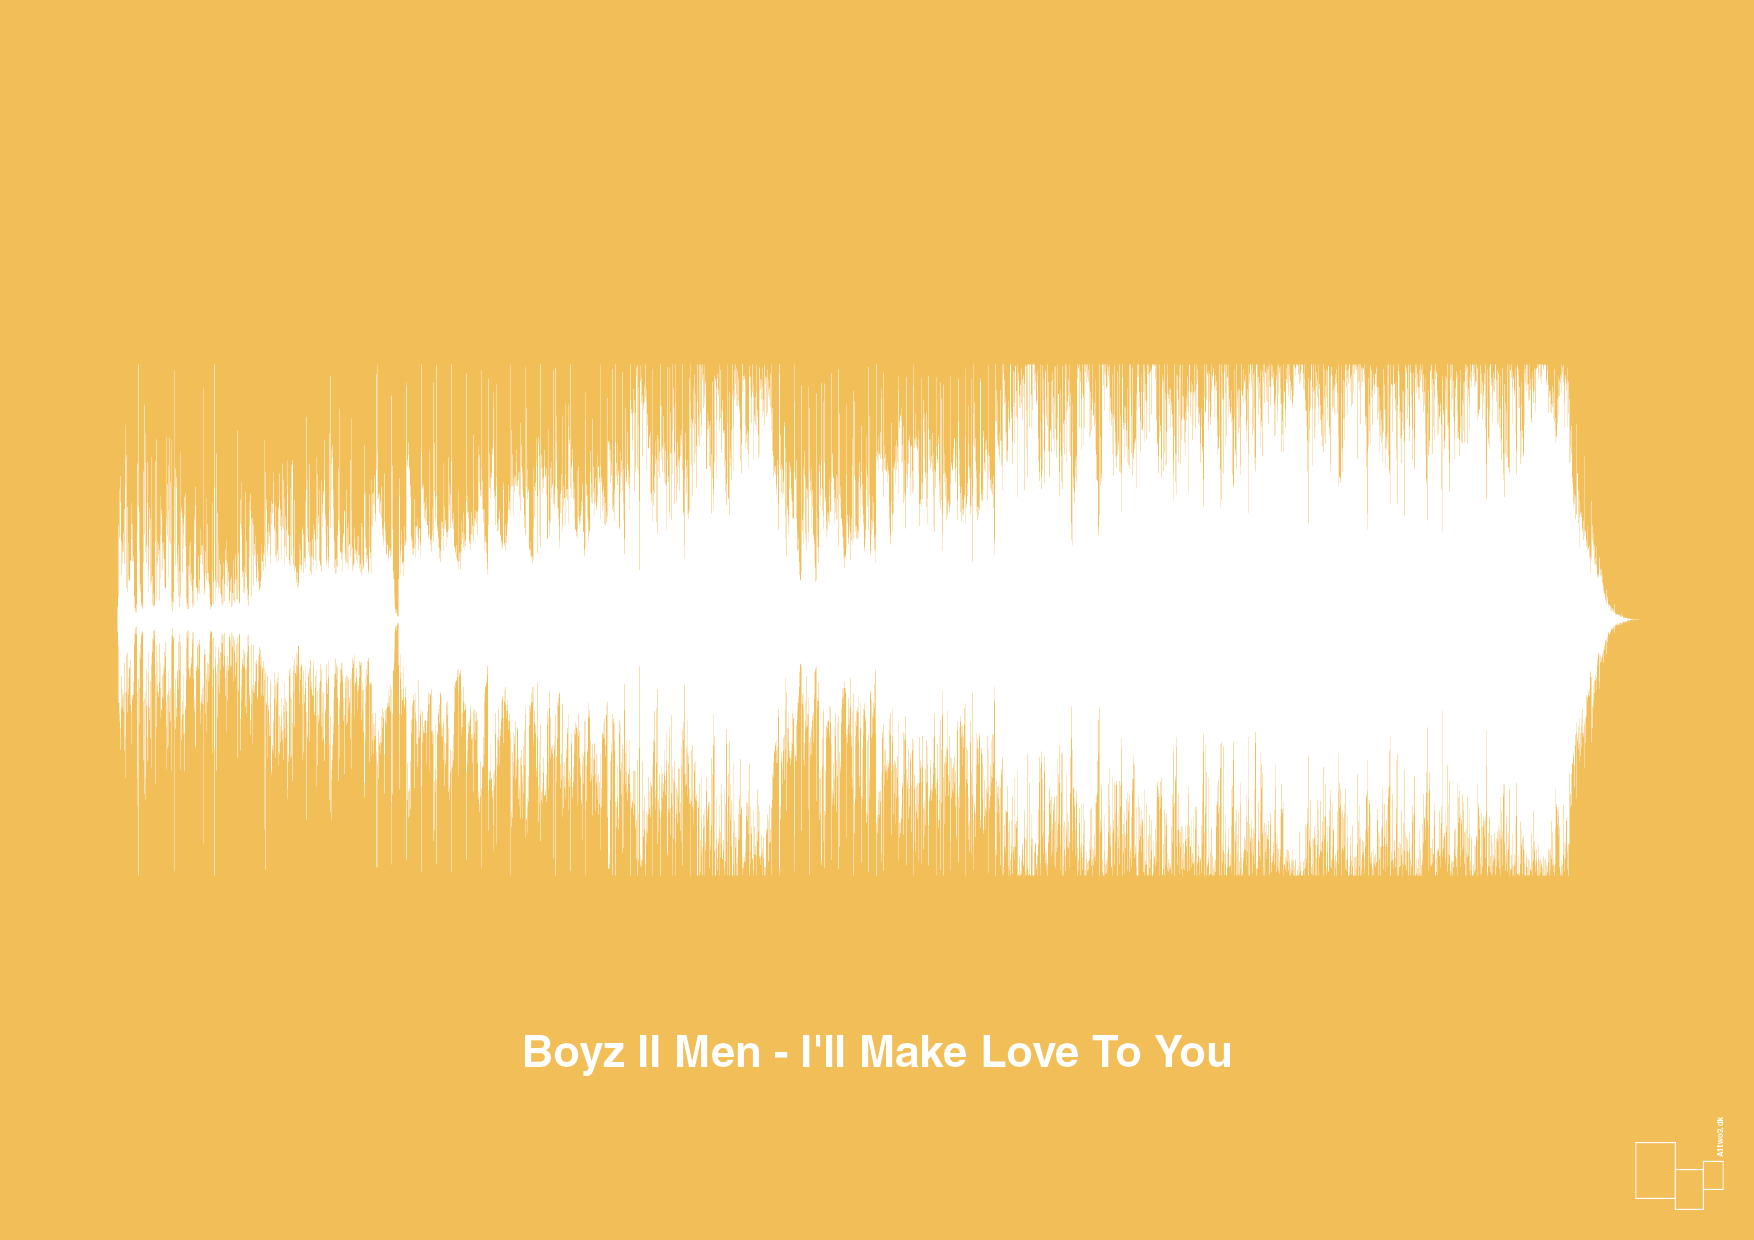 boyz II men - i'll make love to you - Plakat med Musik i Honeycomb